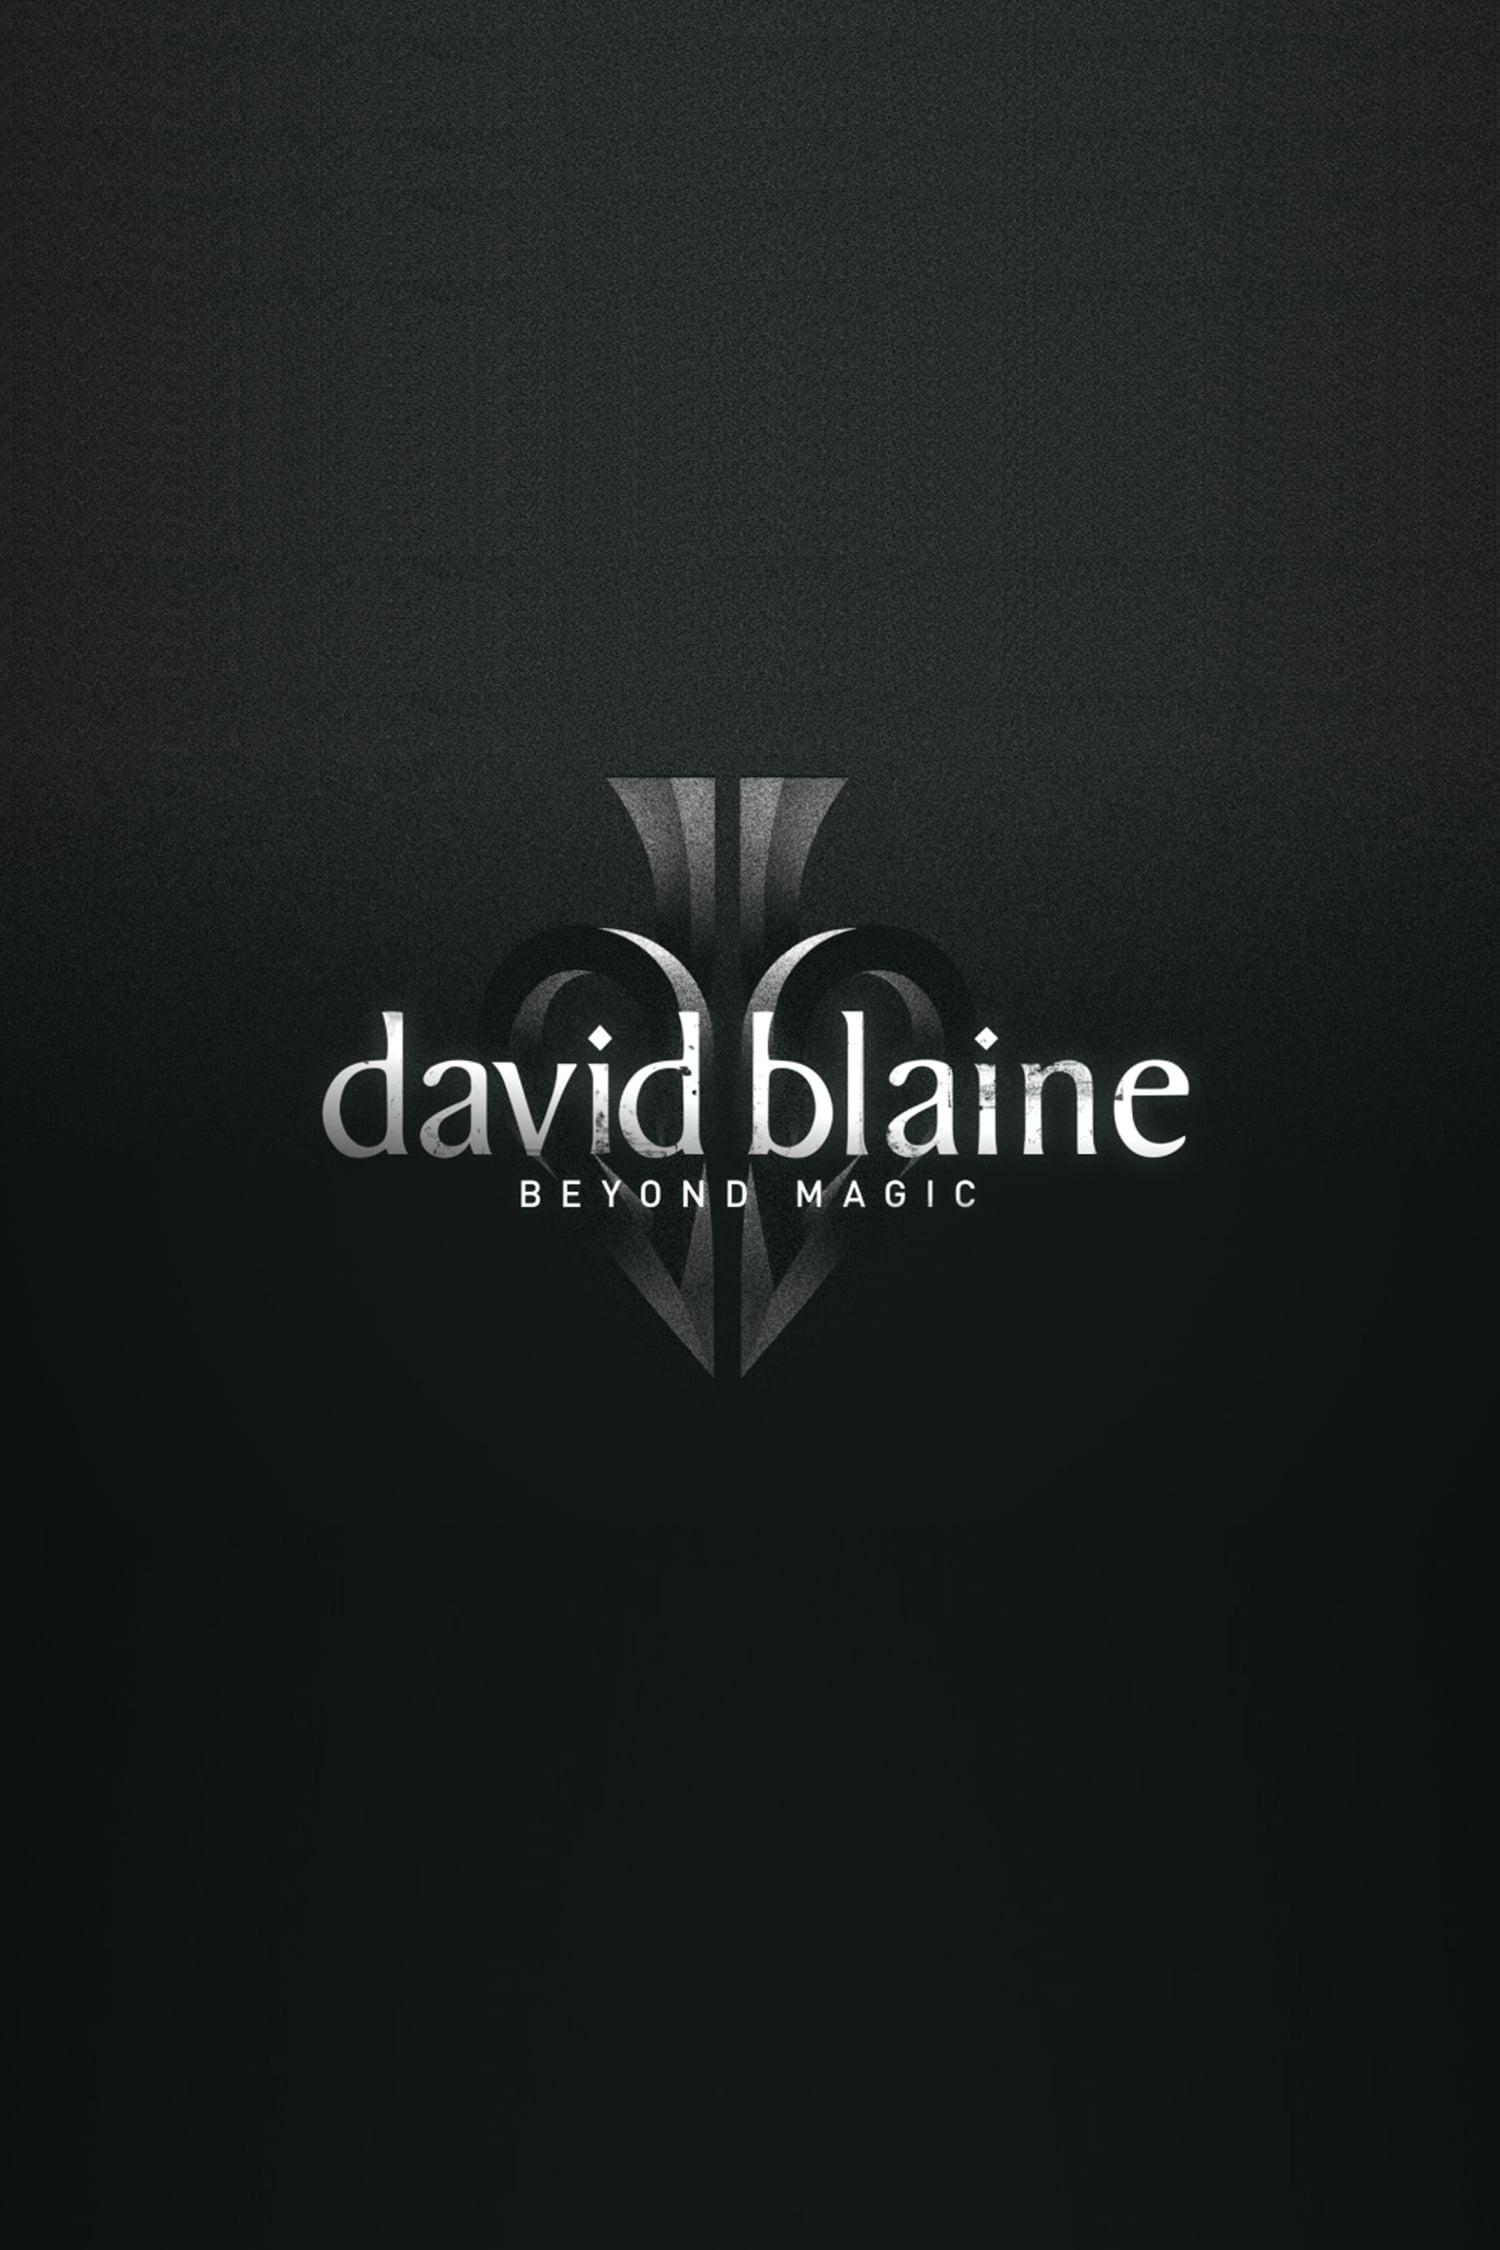 David Blaine: Beyond Magic poster